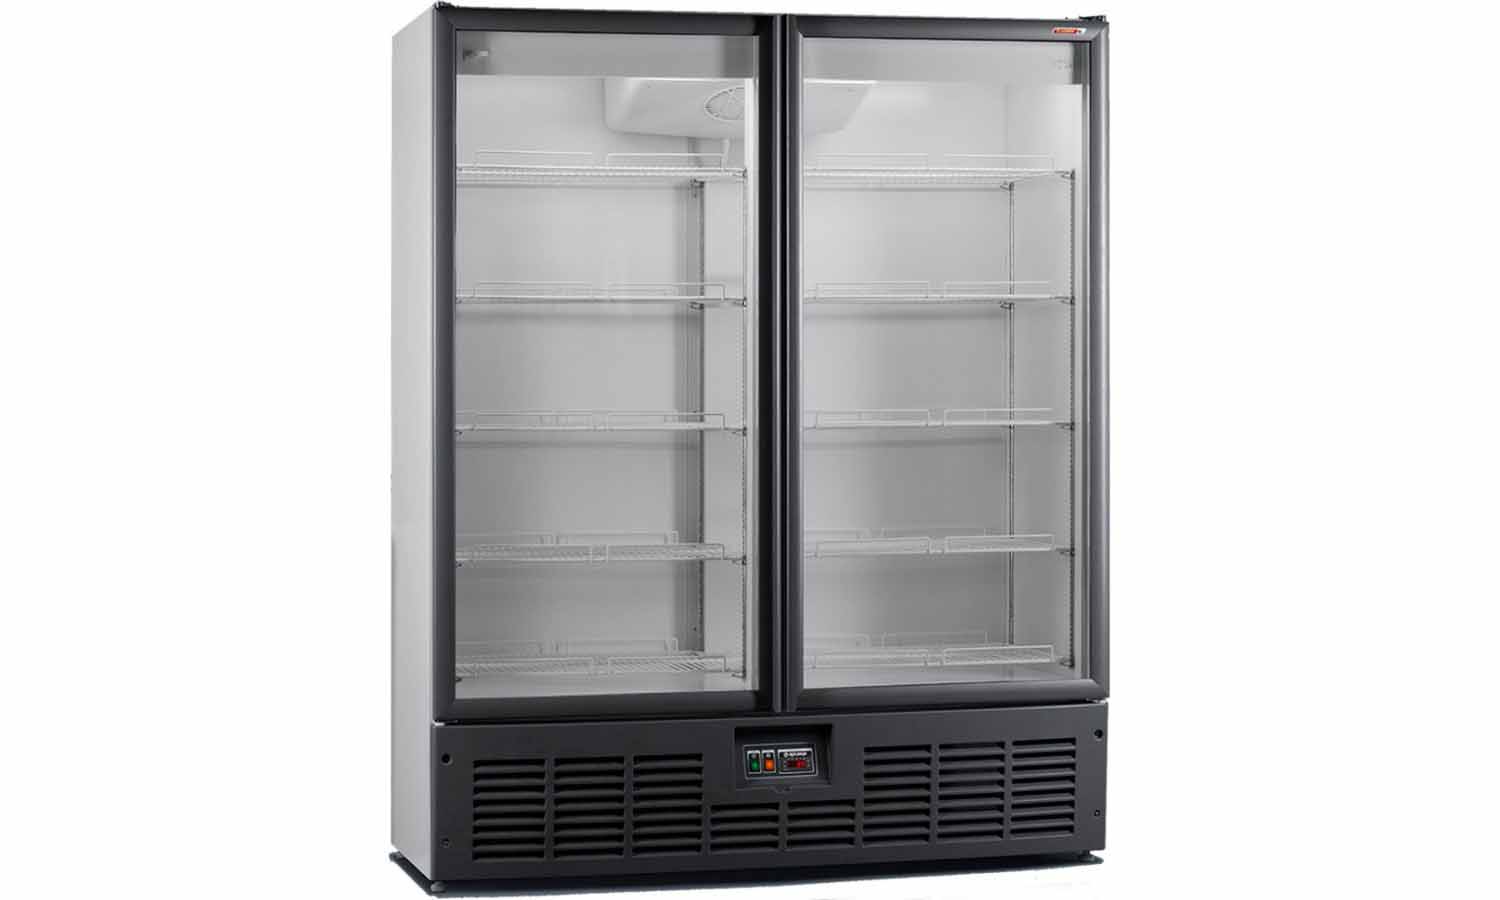 R 1400. Холодильный шкаф Rapsody r700ms. Холодильный шкаф Ариада r1400m. Холодильный шкаф Ариада рапсодия. Холодильный шкаф Ариада r1400 МС.